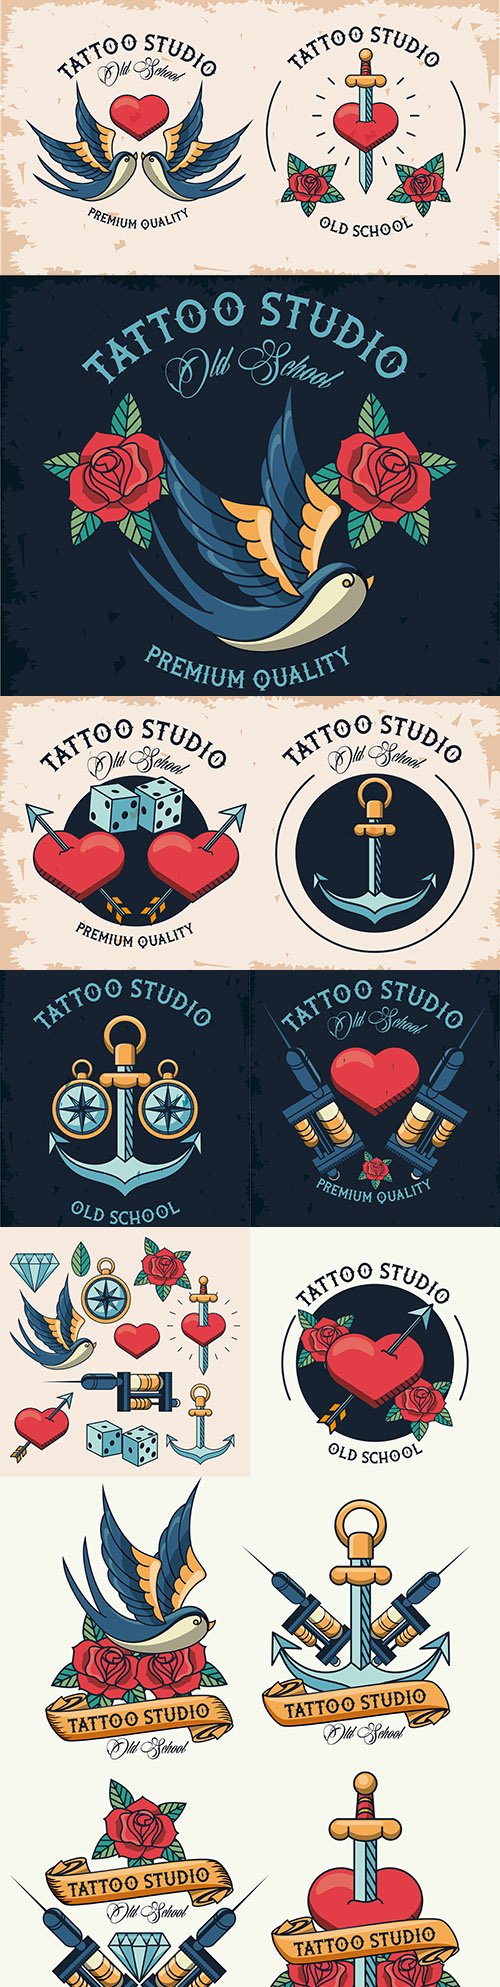 Studio tattoo set design elements and logo